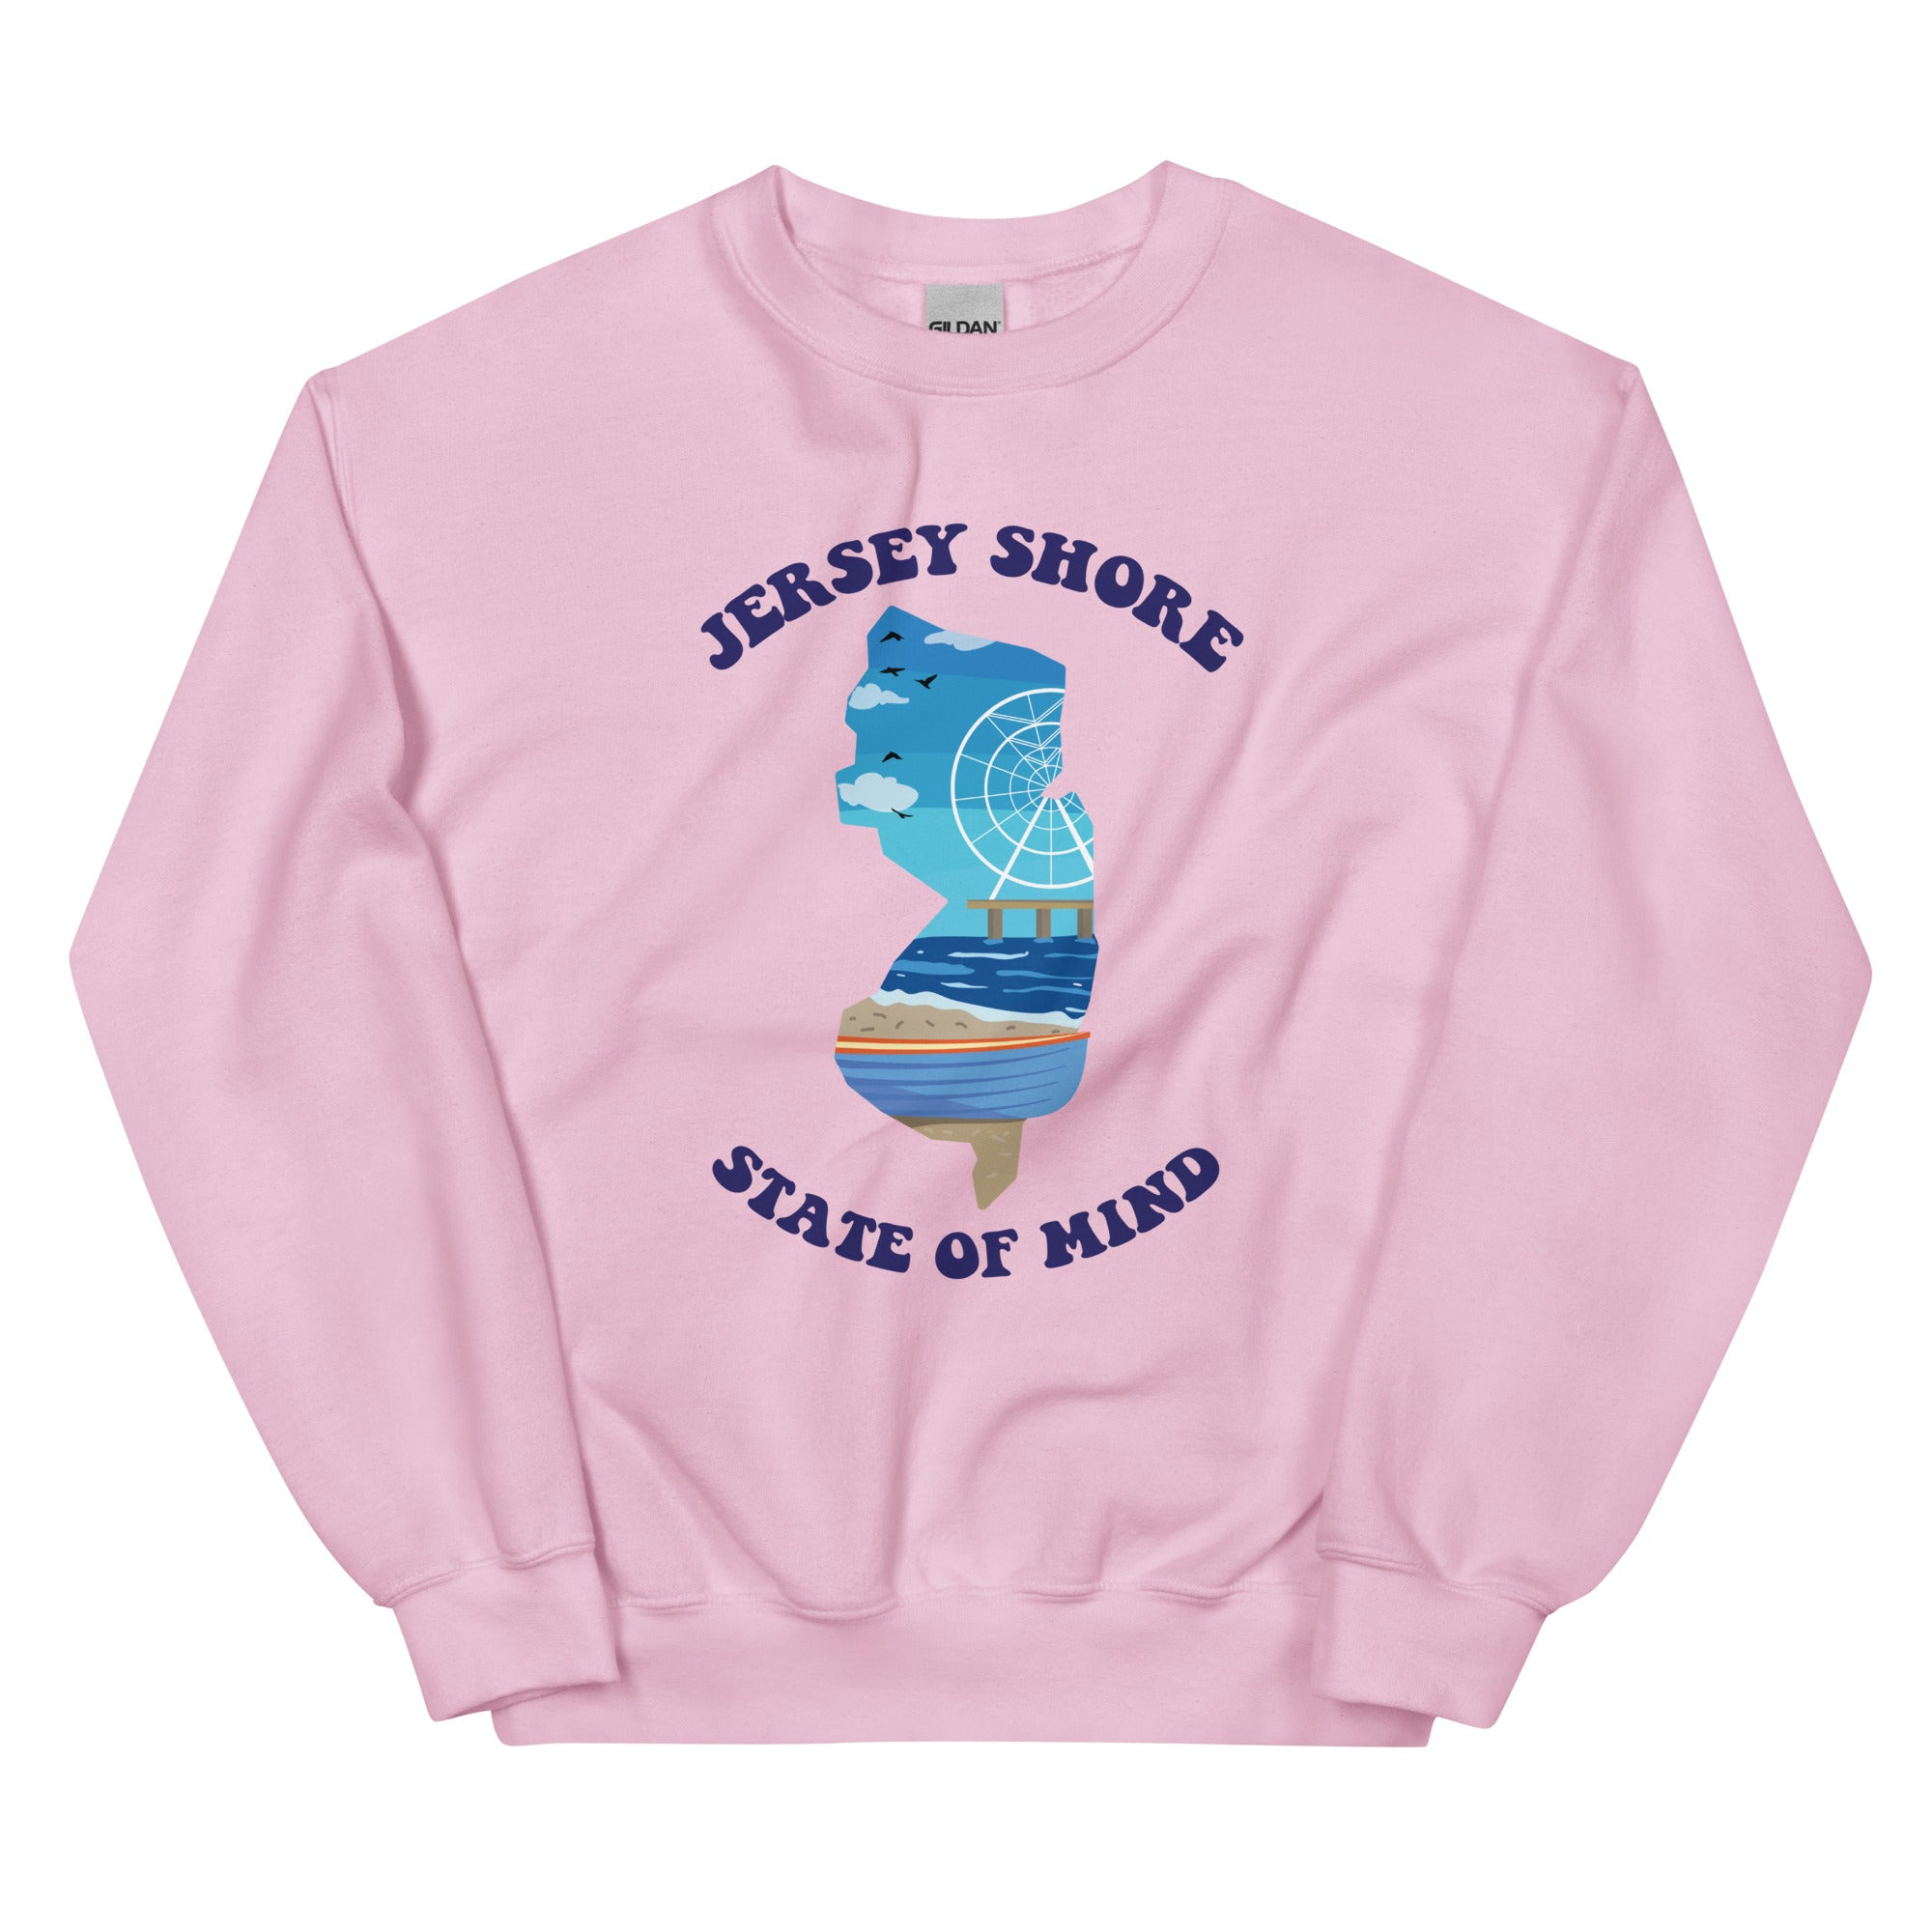 "Jersey Shore State of Mind" Sweatshirt